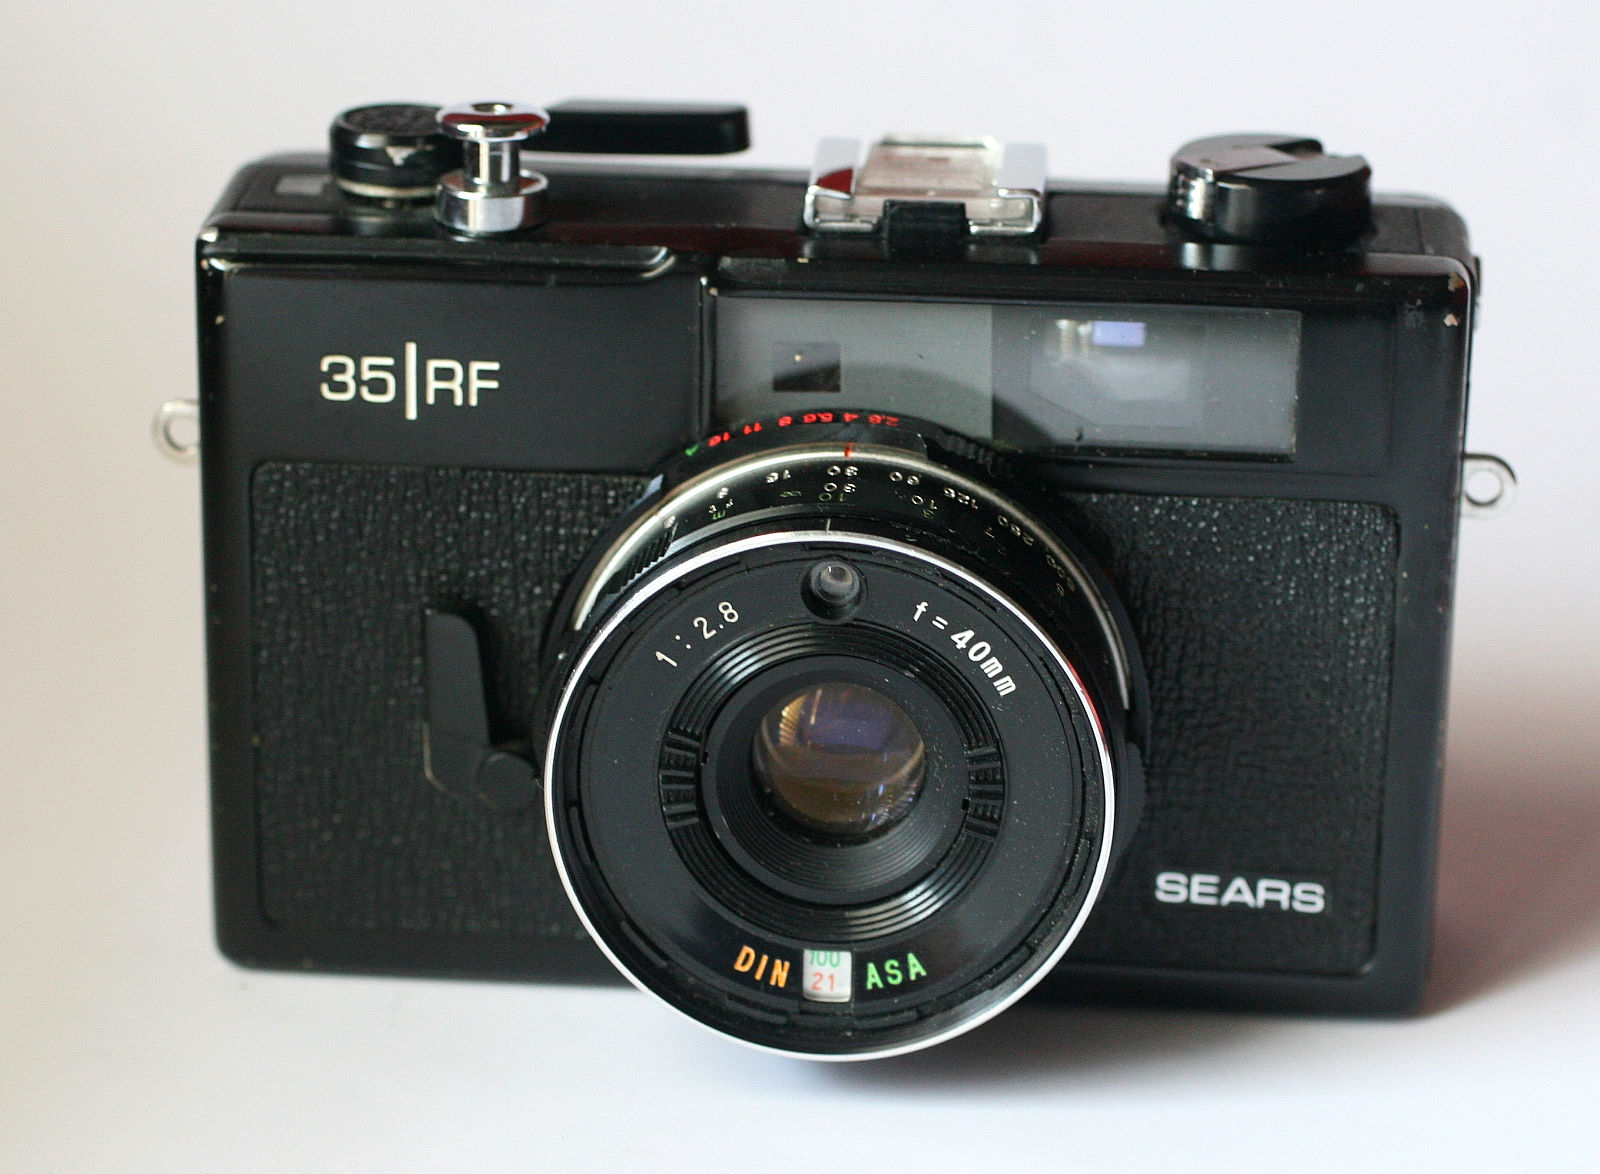 My Sears 35|RF